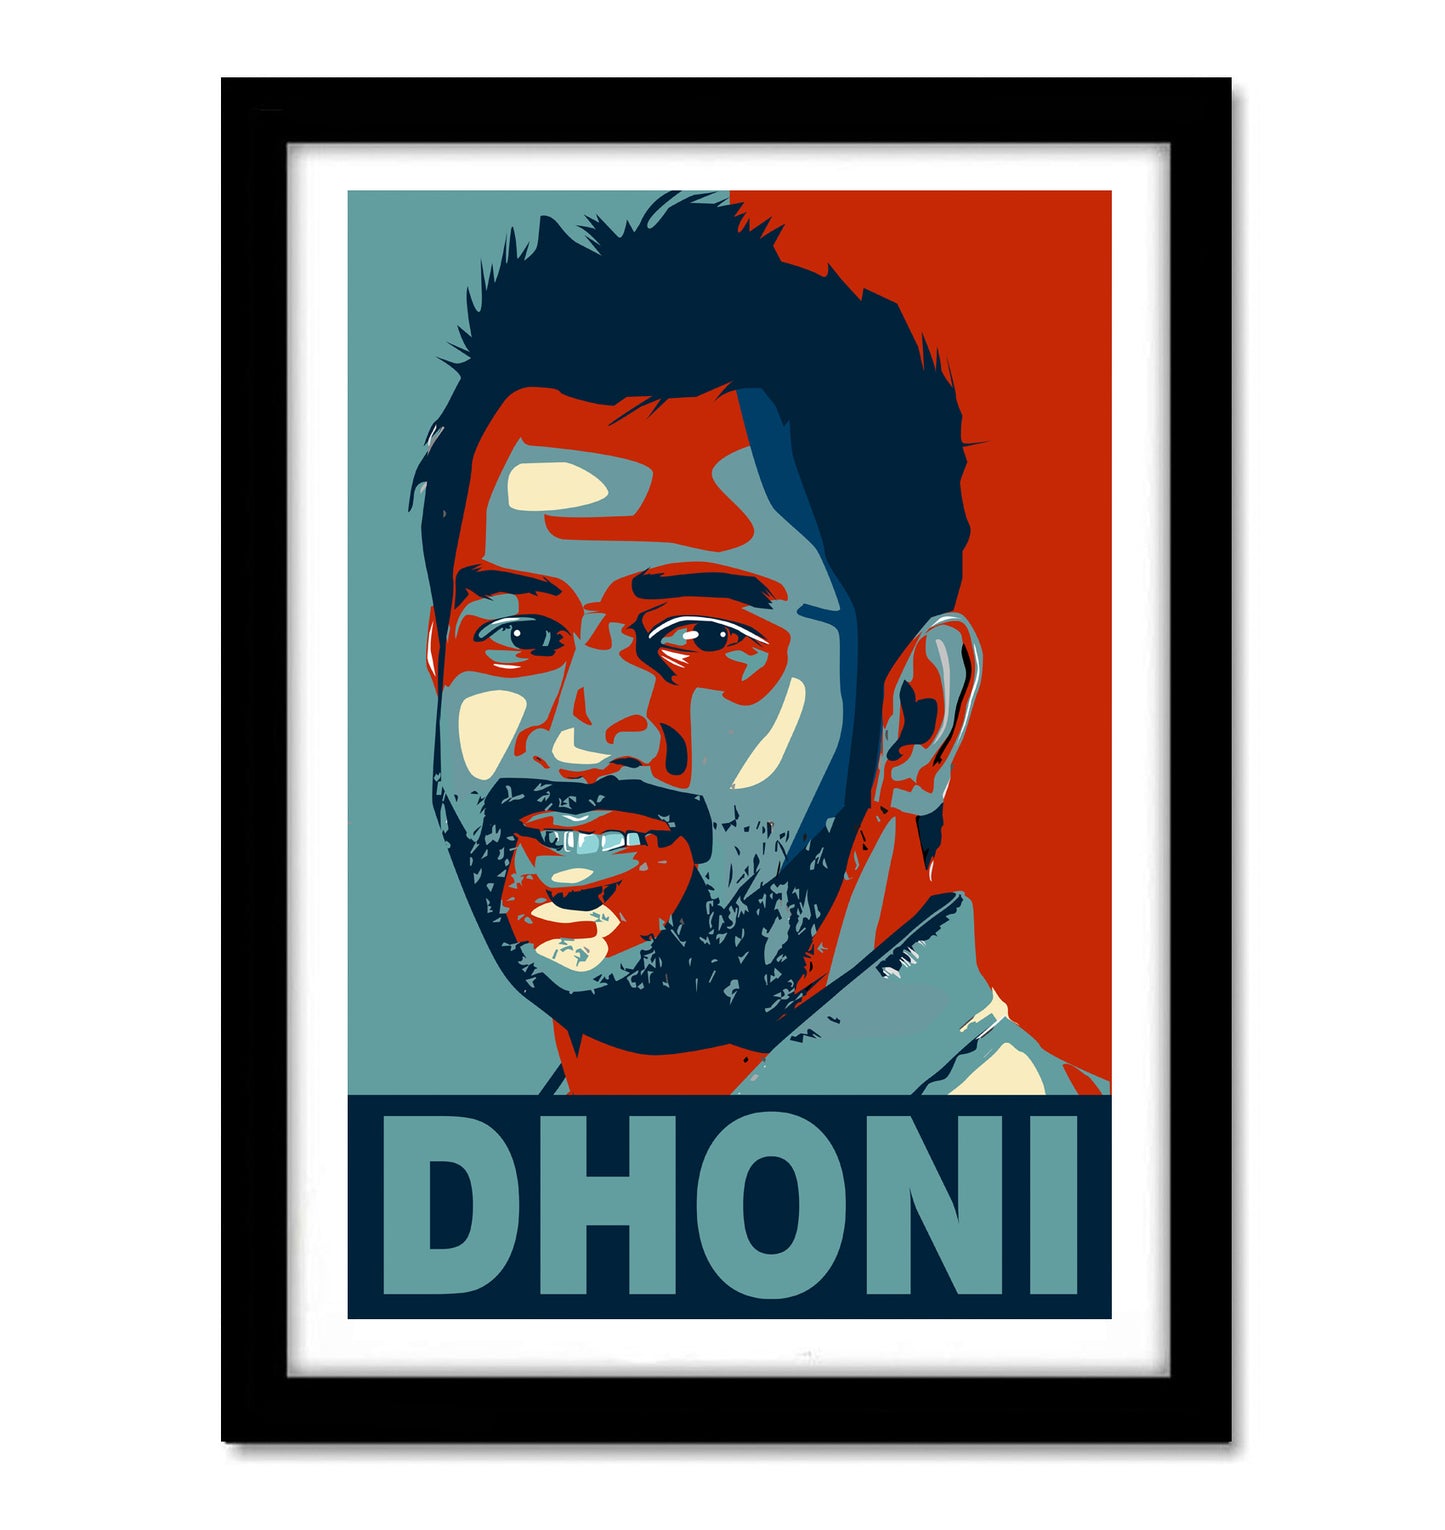 Dhoni Art work